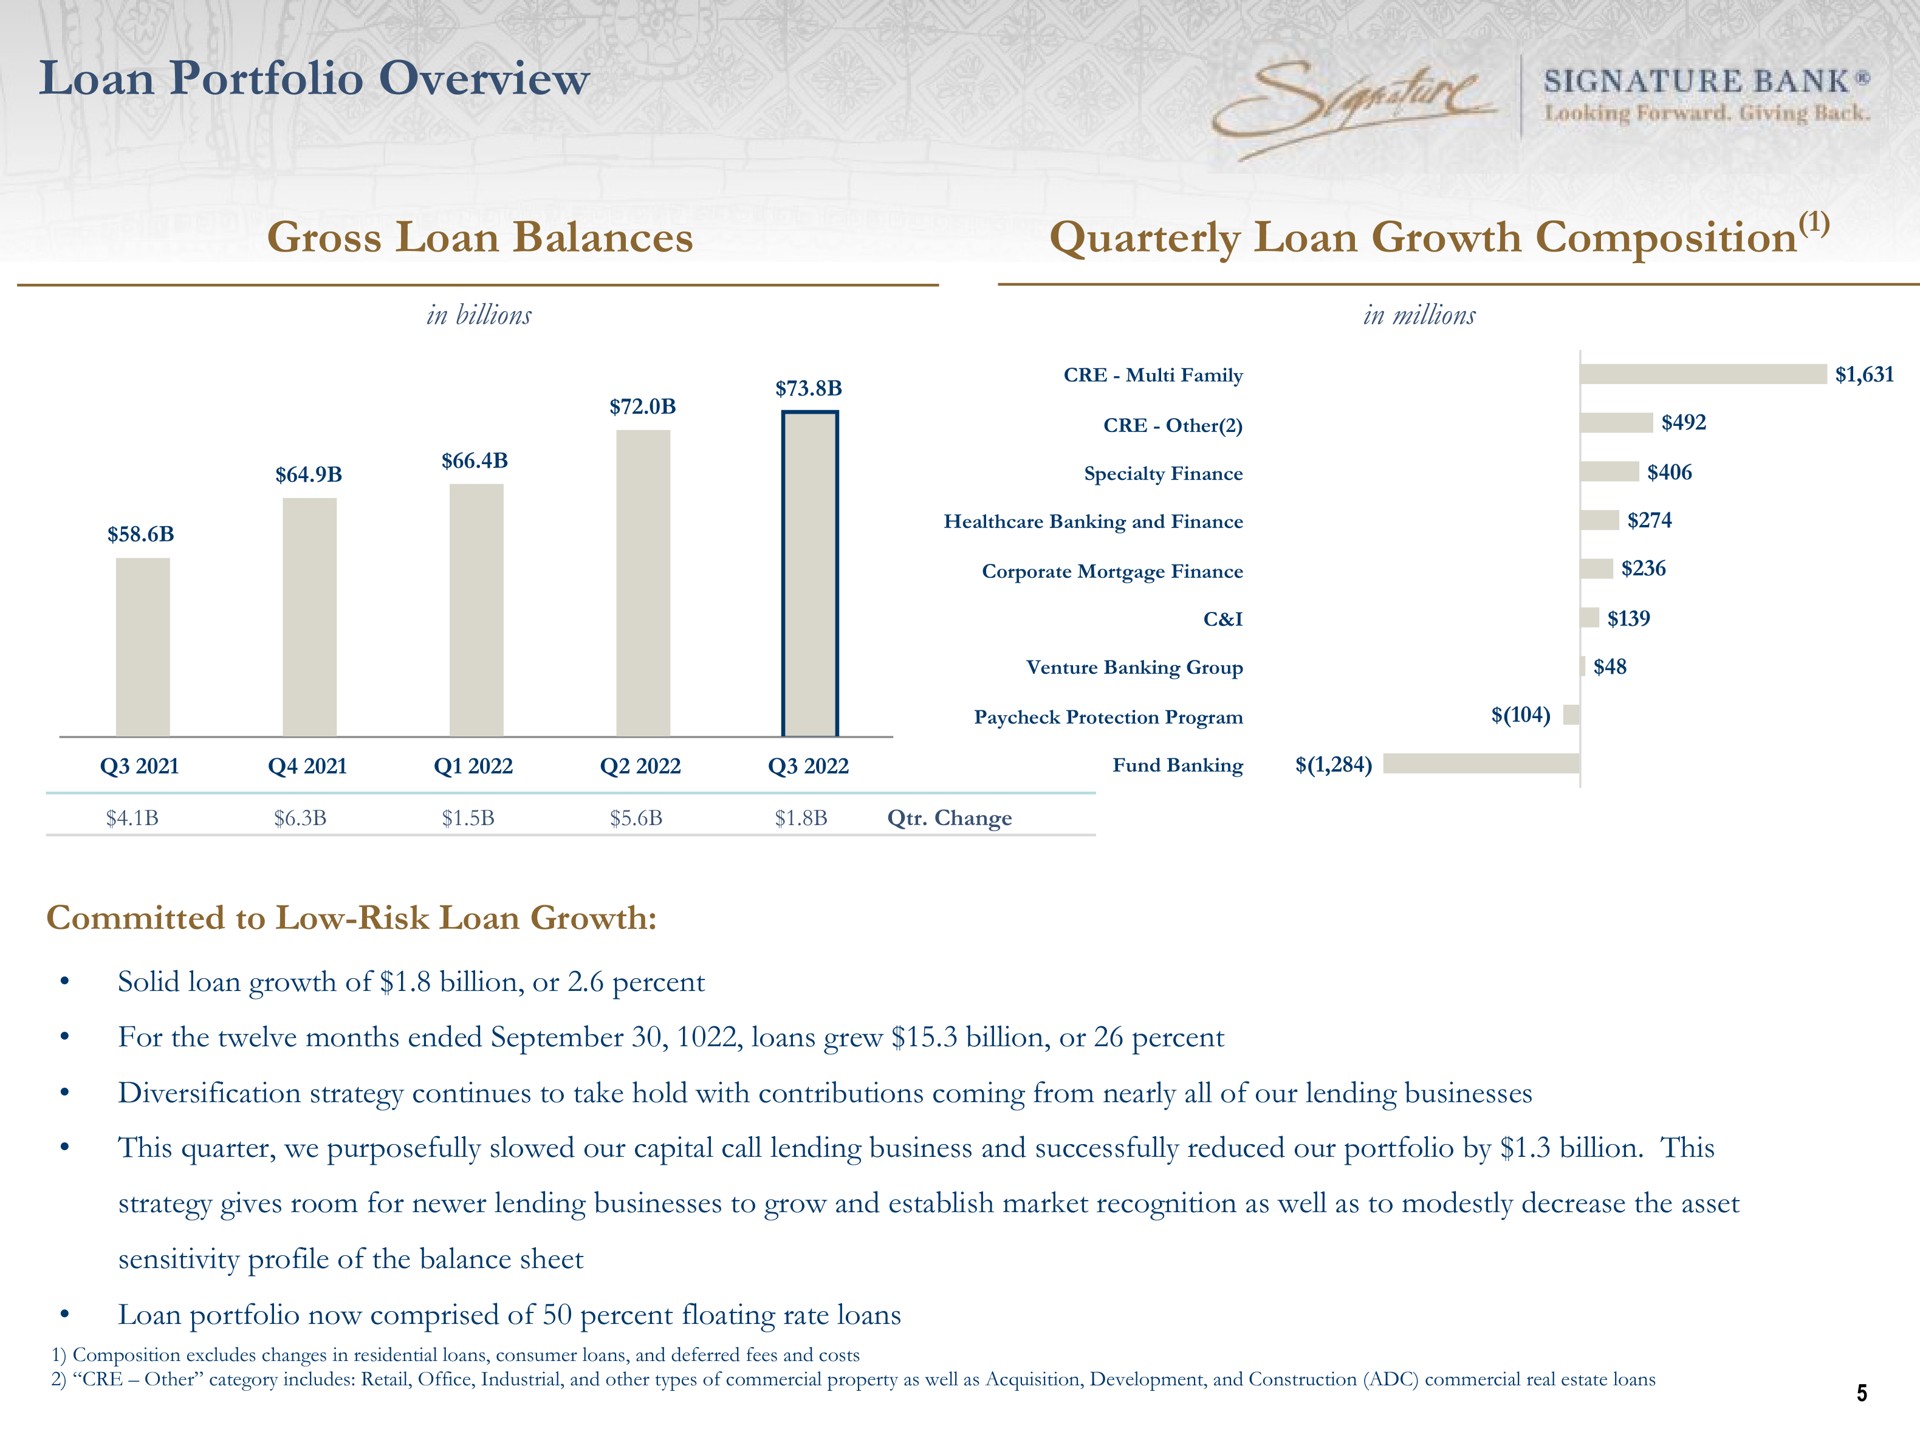 loan portfolio overview gross loan balances quarterly loan growth composition a signature bank | Signature Bank